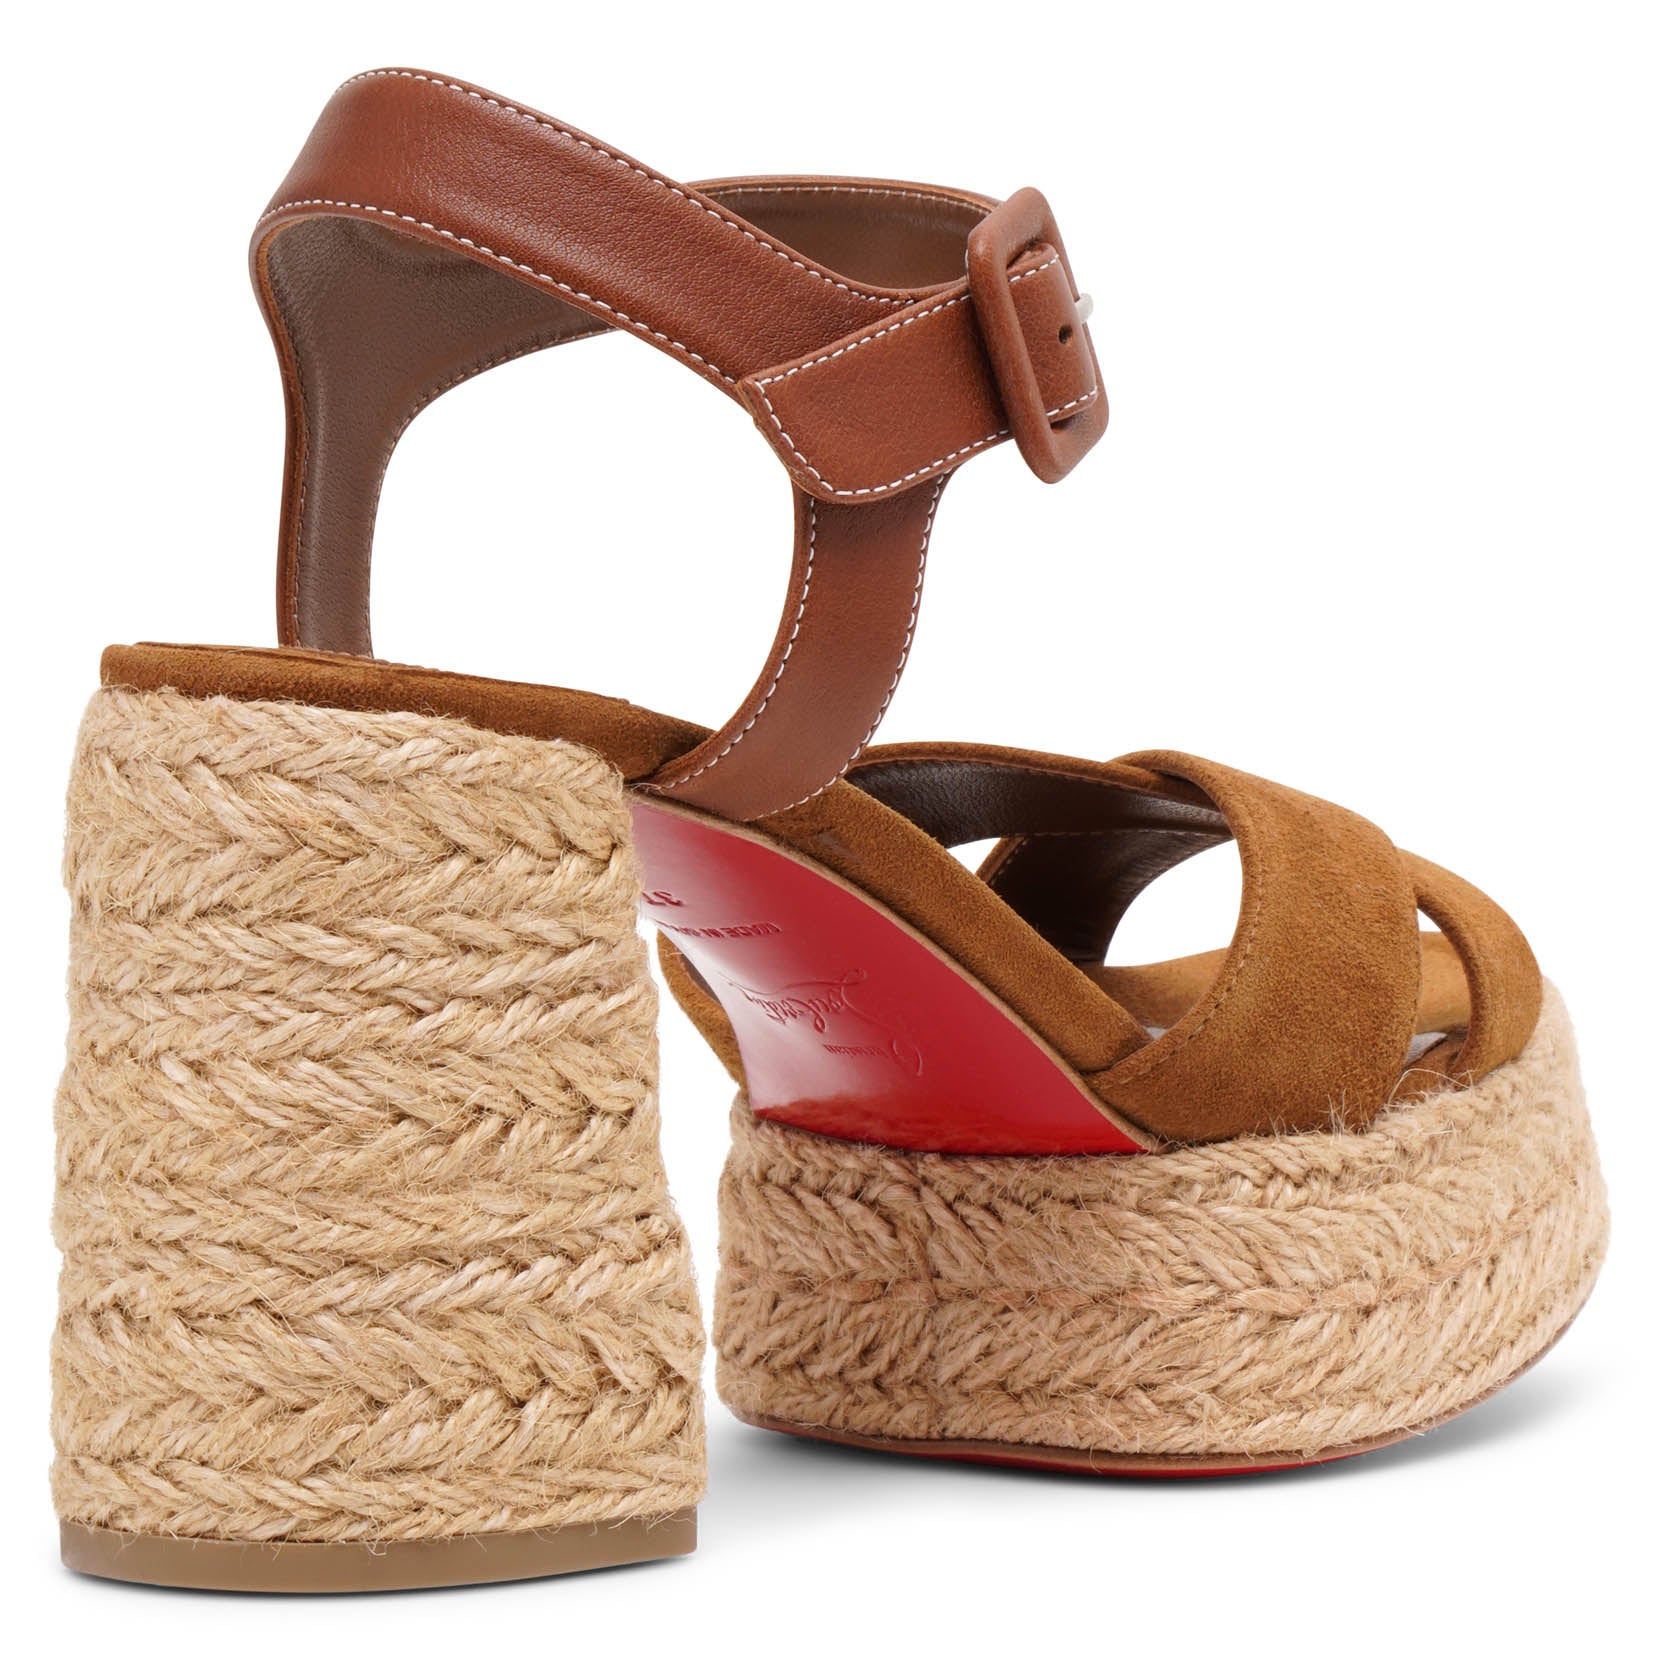 Calakala 70 brown suede sandals